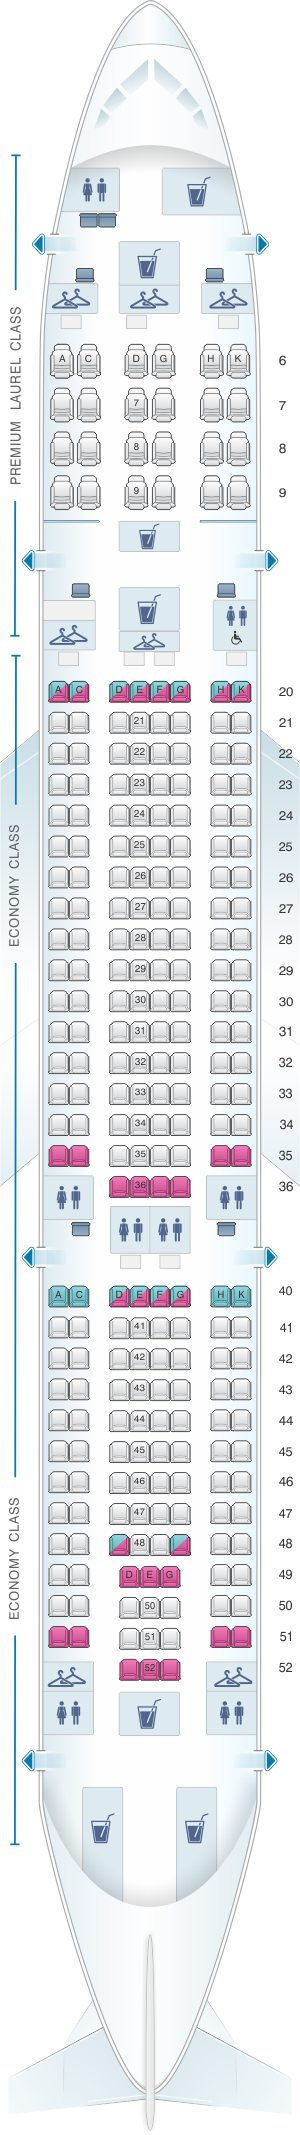 Seat Map Eva Air Airbus A330 200